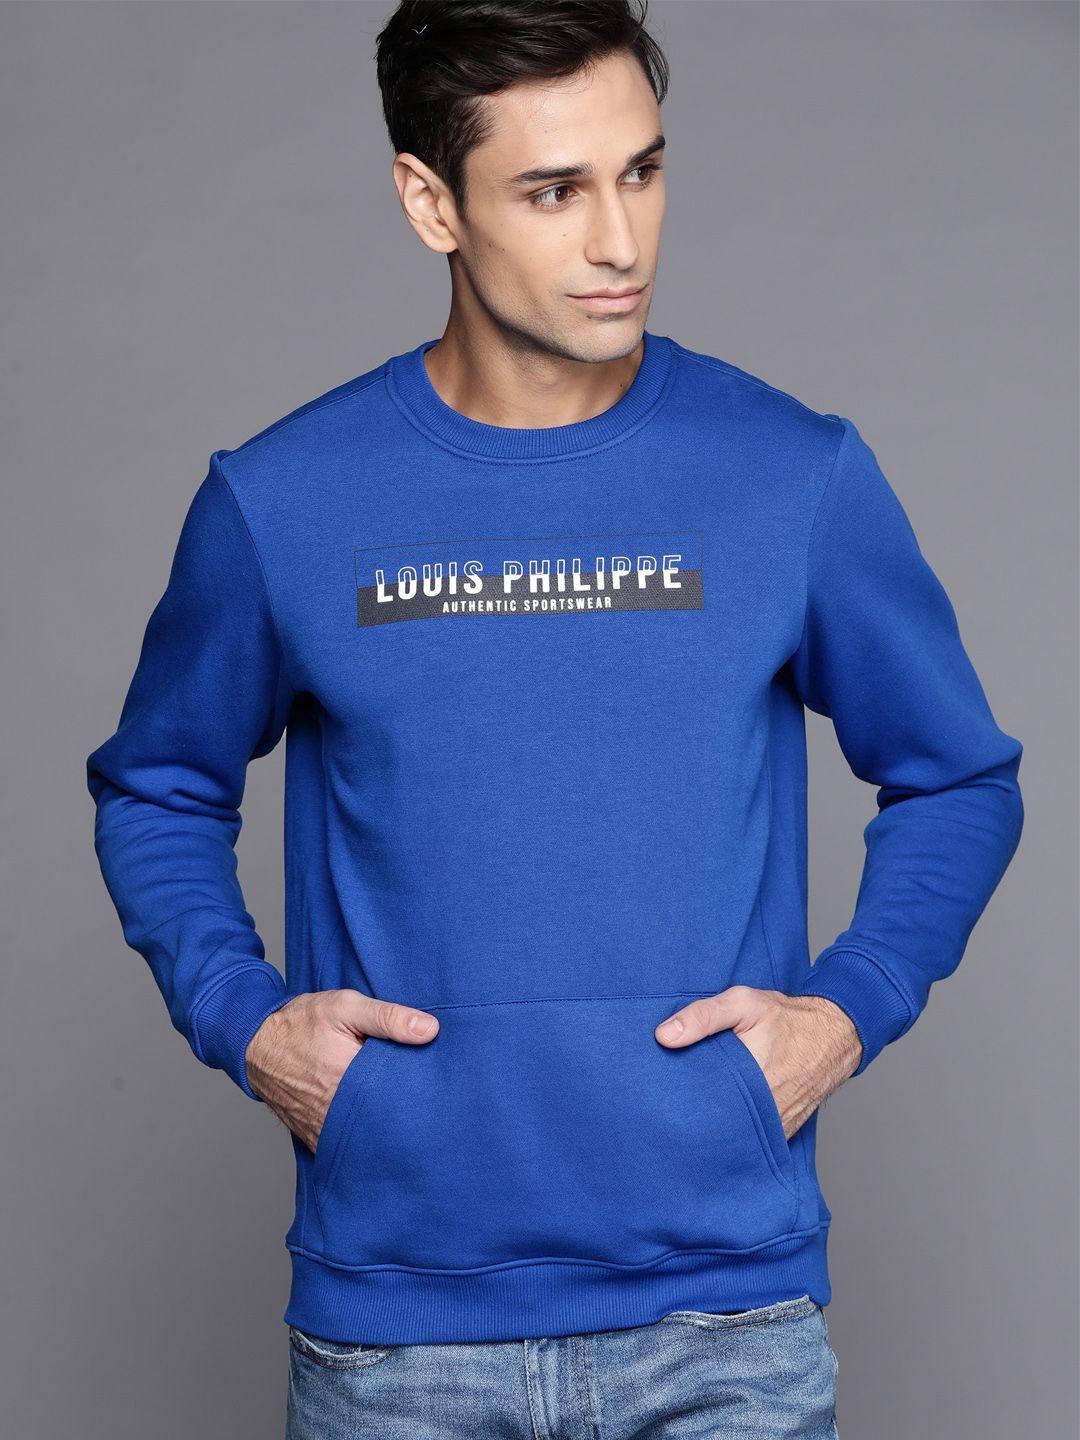 louis philippe sport men blue & black brand logo printed sweatshirt